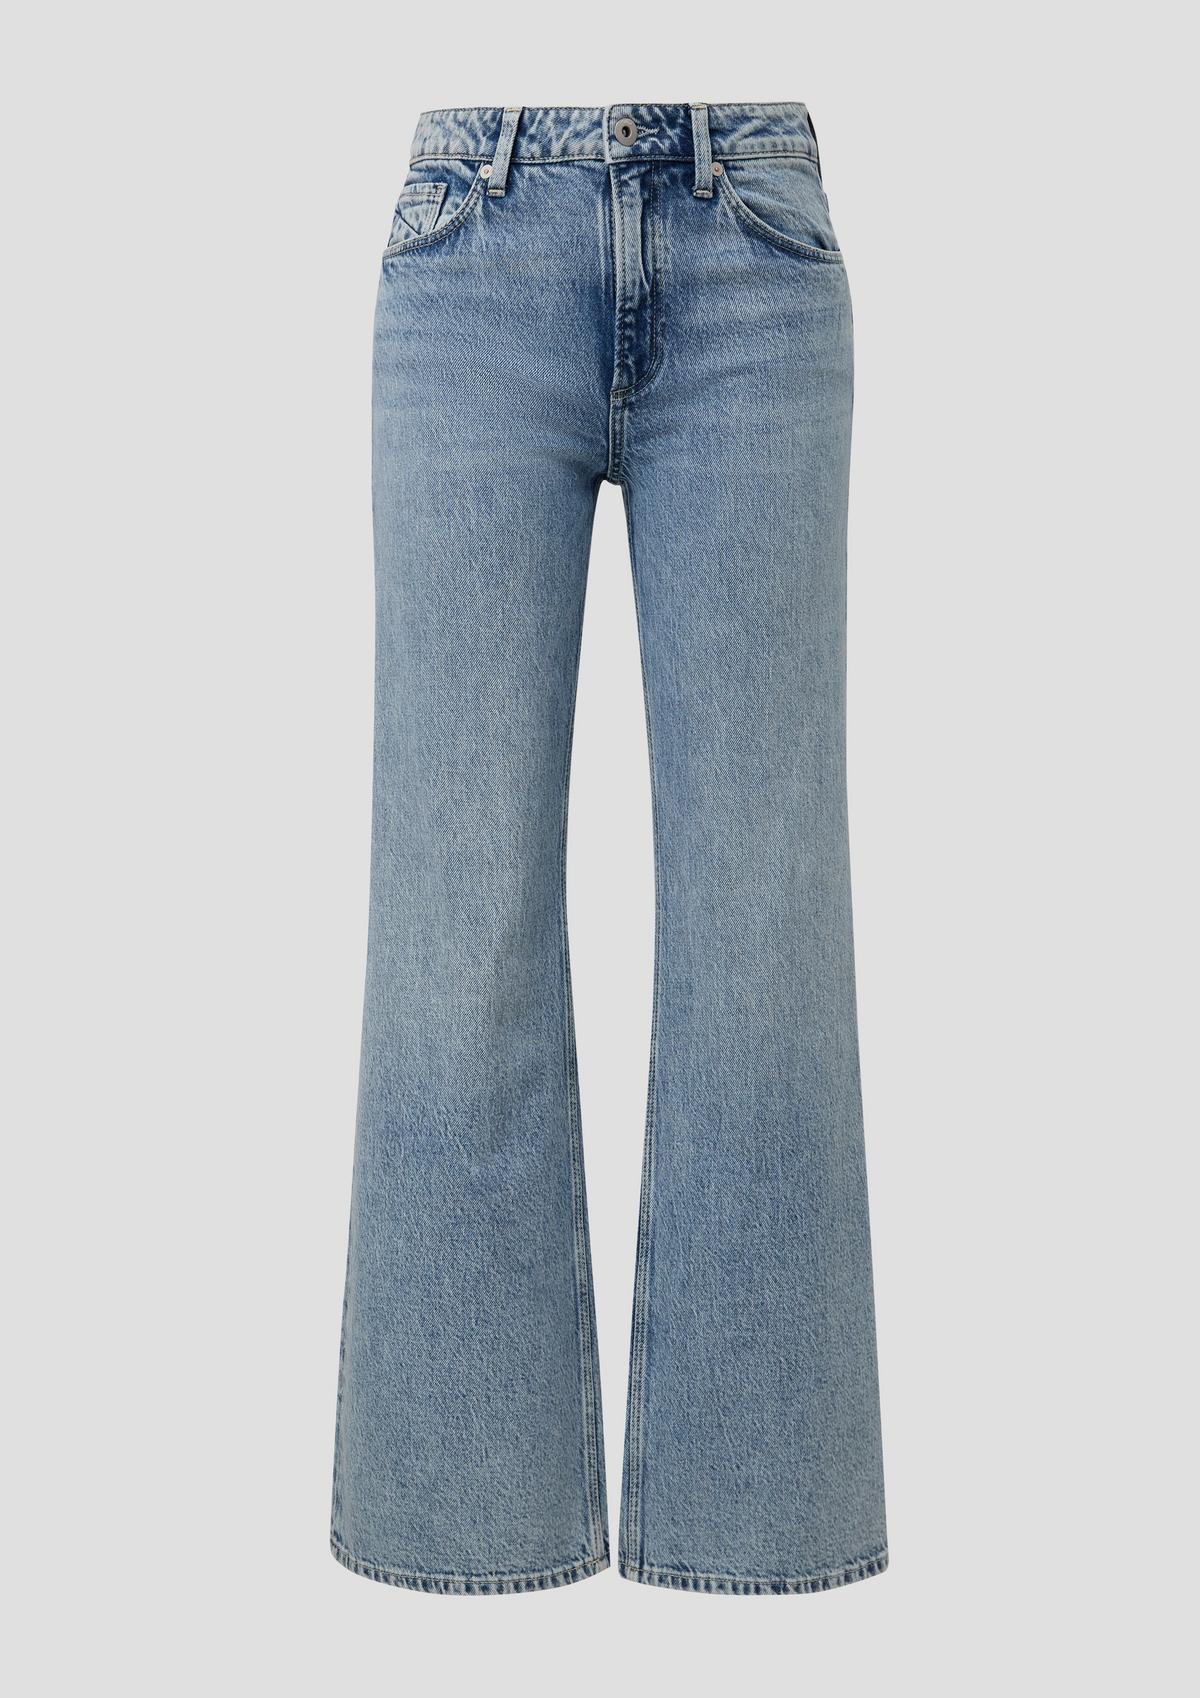 s.Oliver Catie jeans / slim fit / high rise / wide leg / acid wash